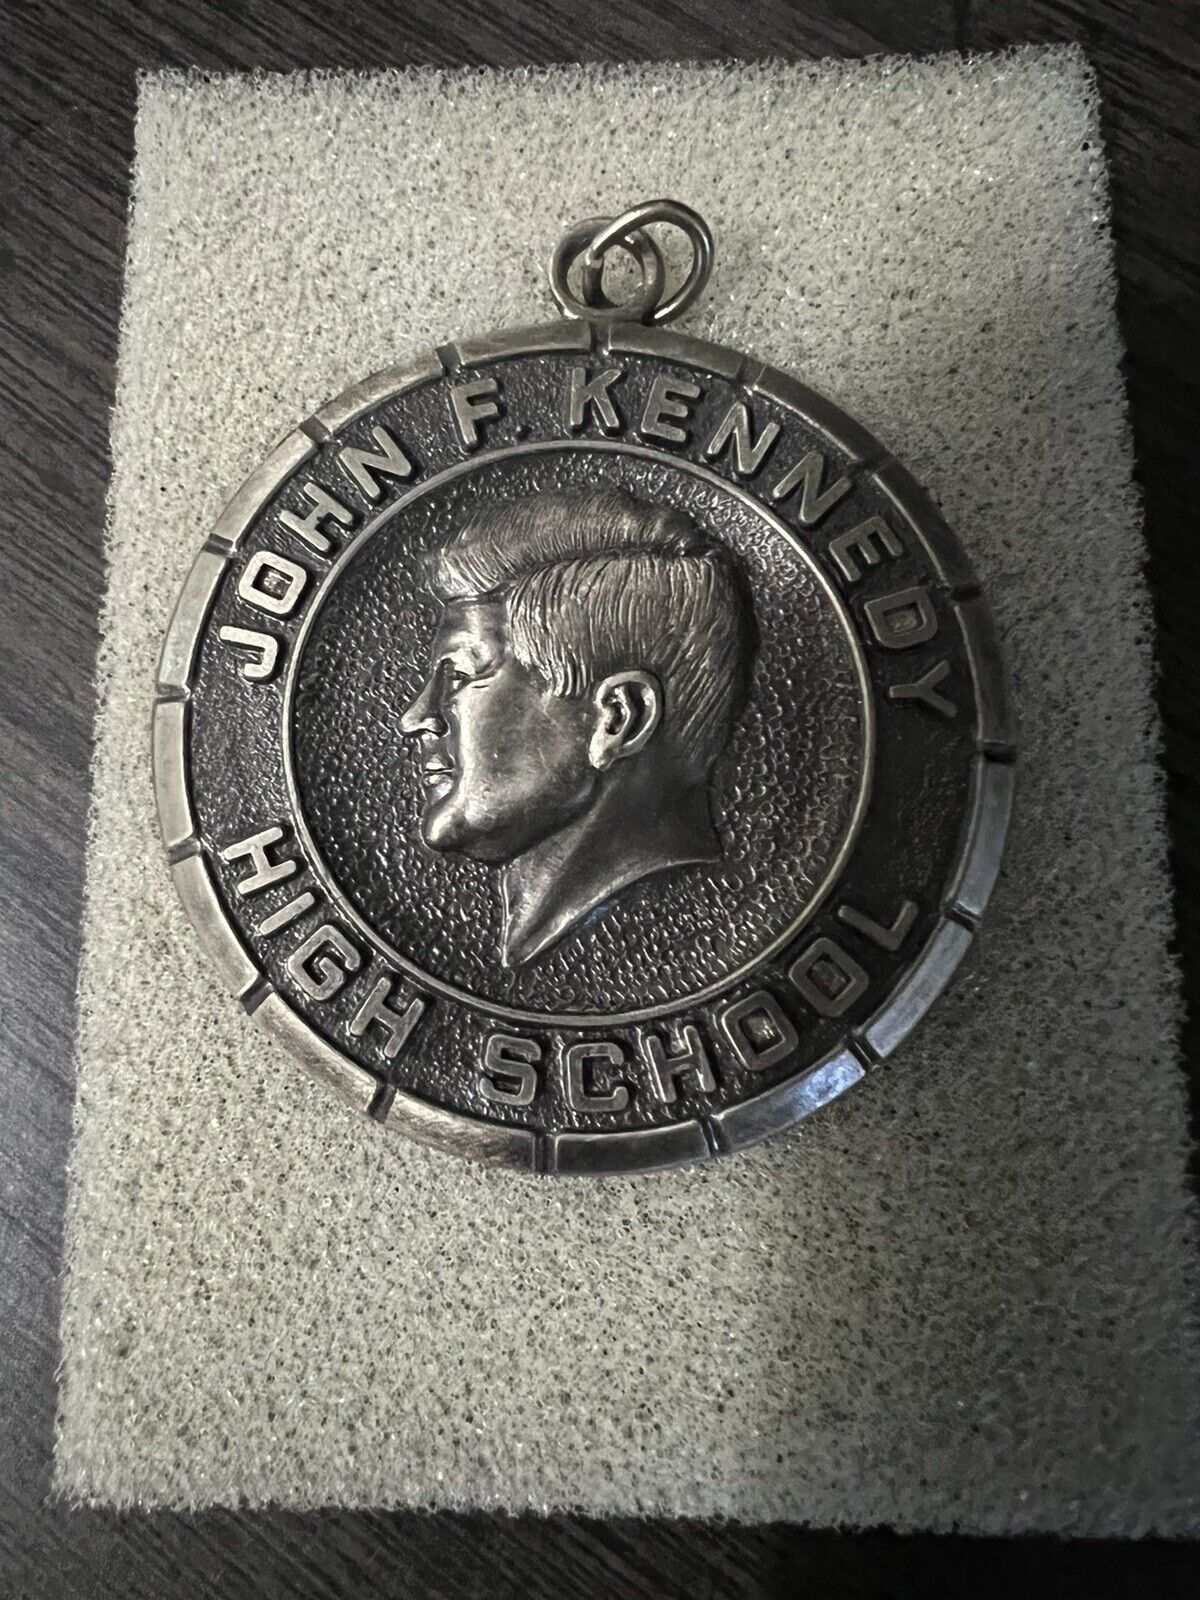 1988 Vintage John F. Kennedy High School Medal/Pendant. E. Peterson